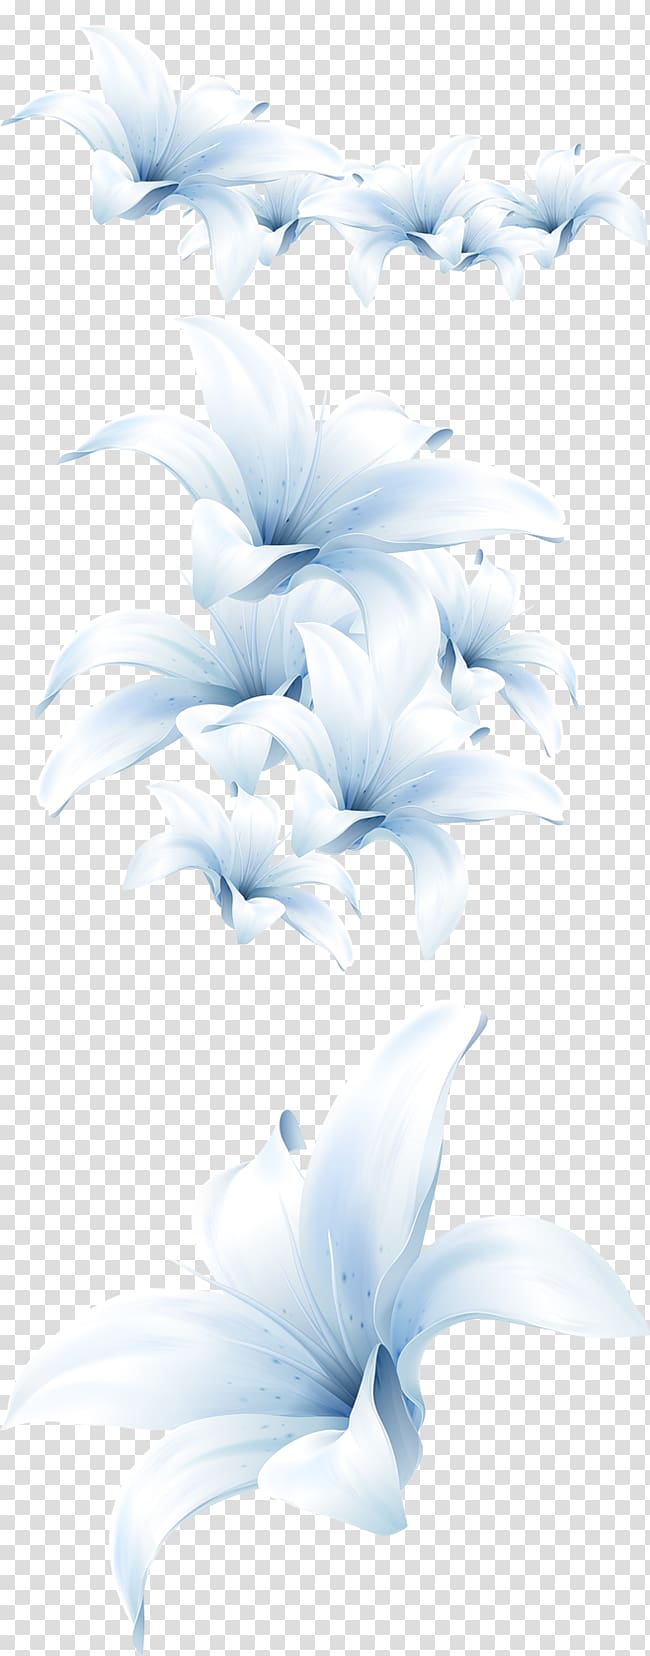 white lily flowers illustration, Flower bouquet Lilium candidum White, lily transparent background PNG clipart